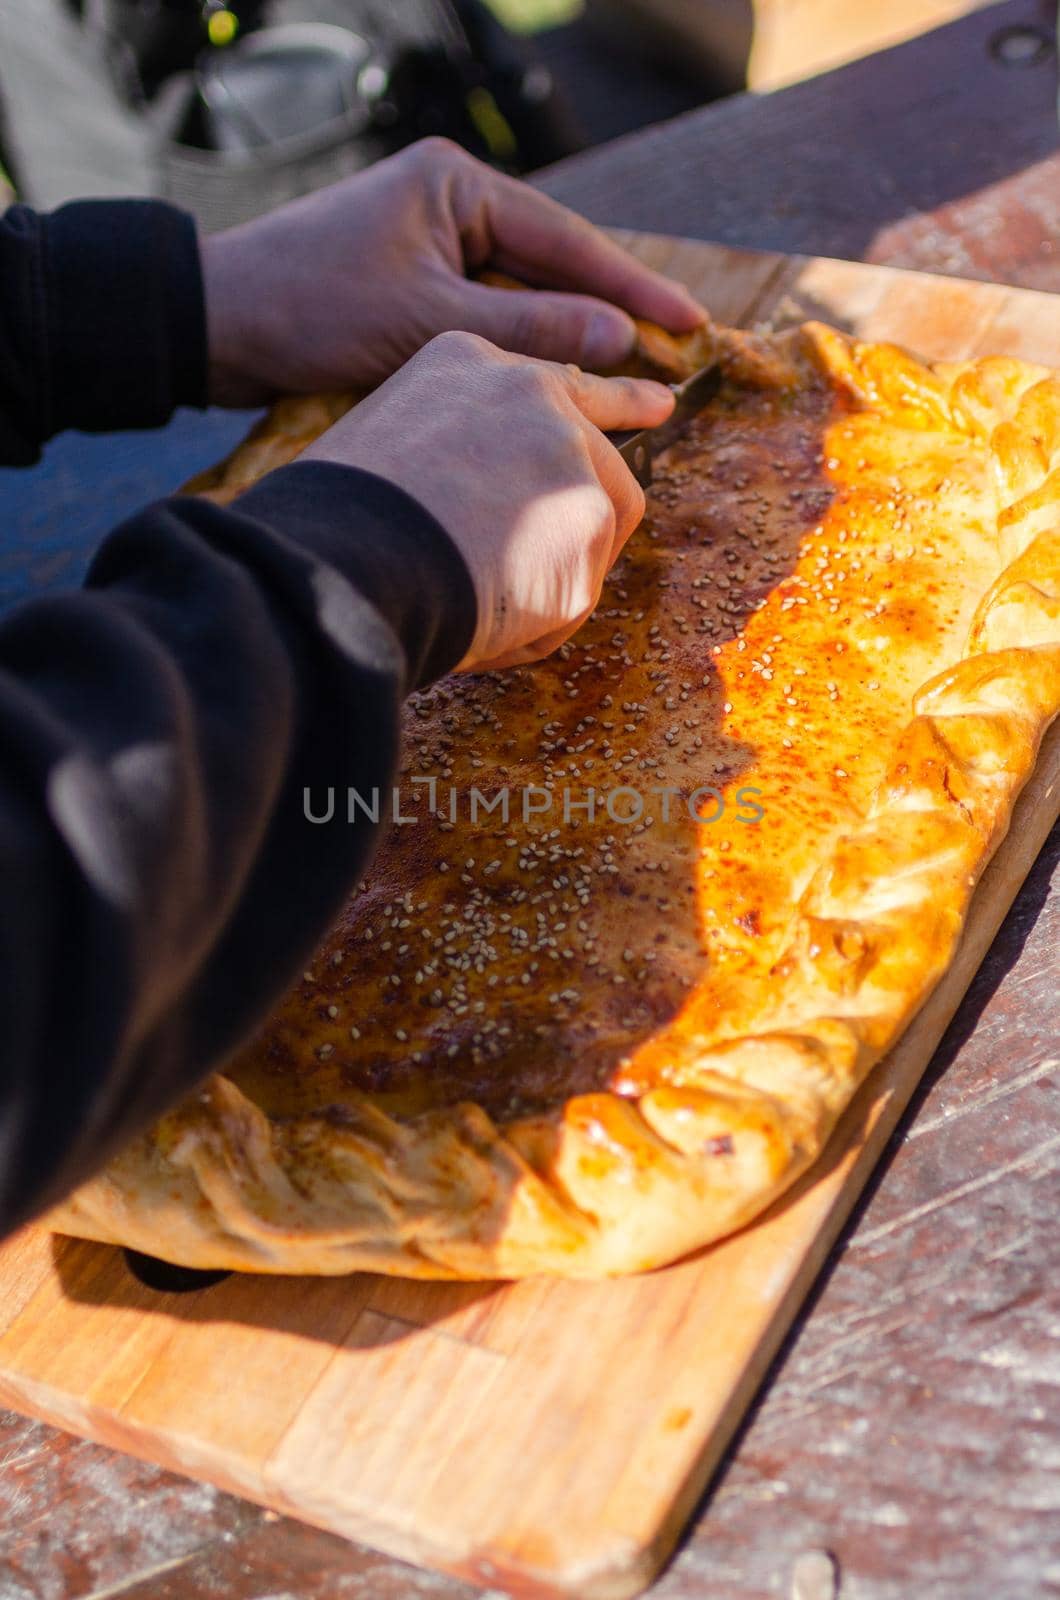 Galician empanada picnic on sunny day by martinscphoto